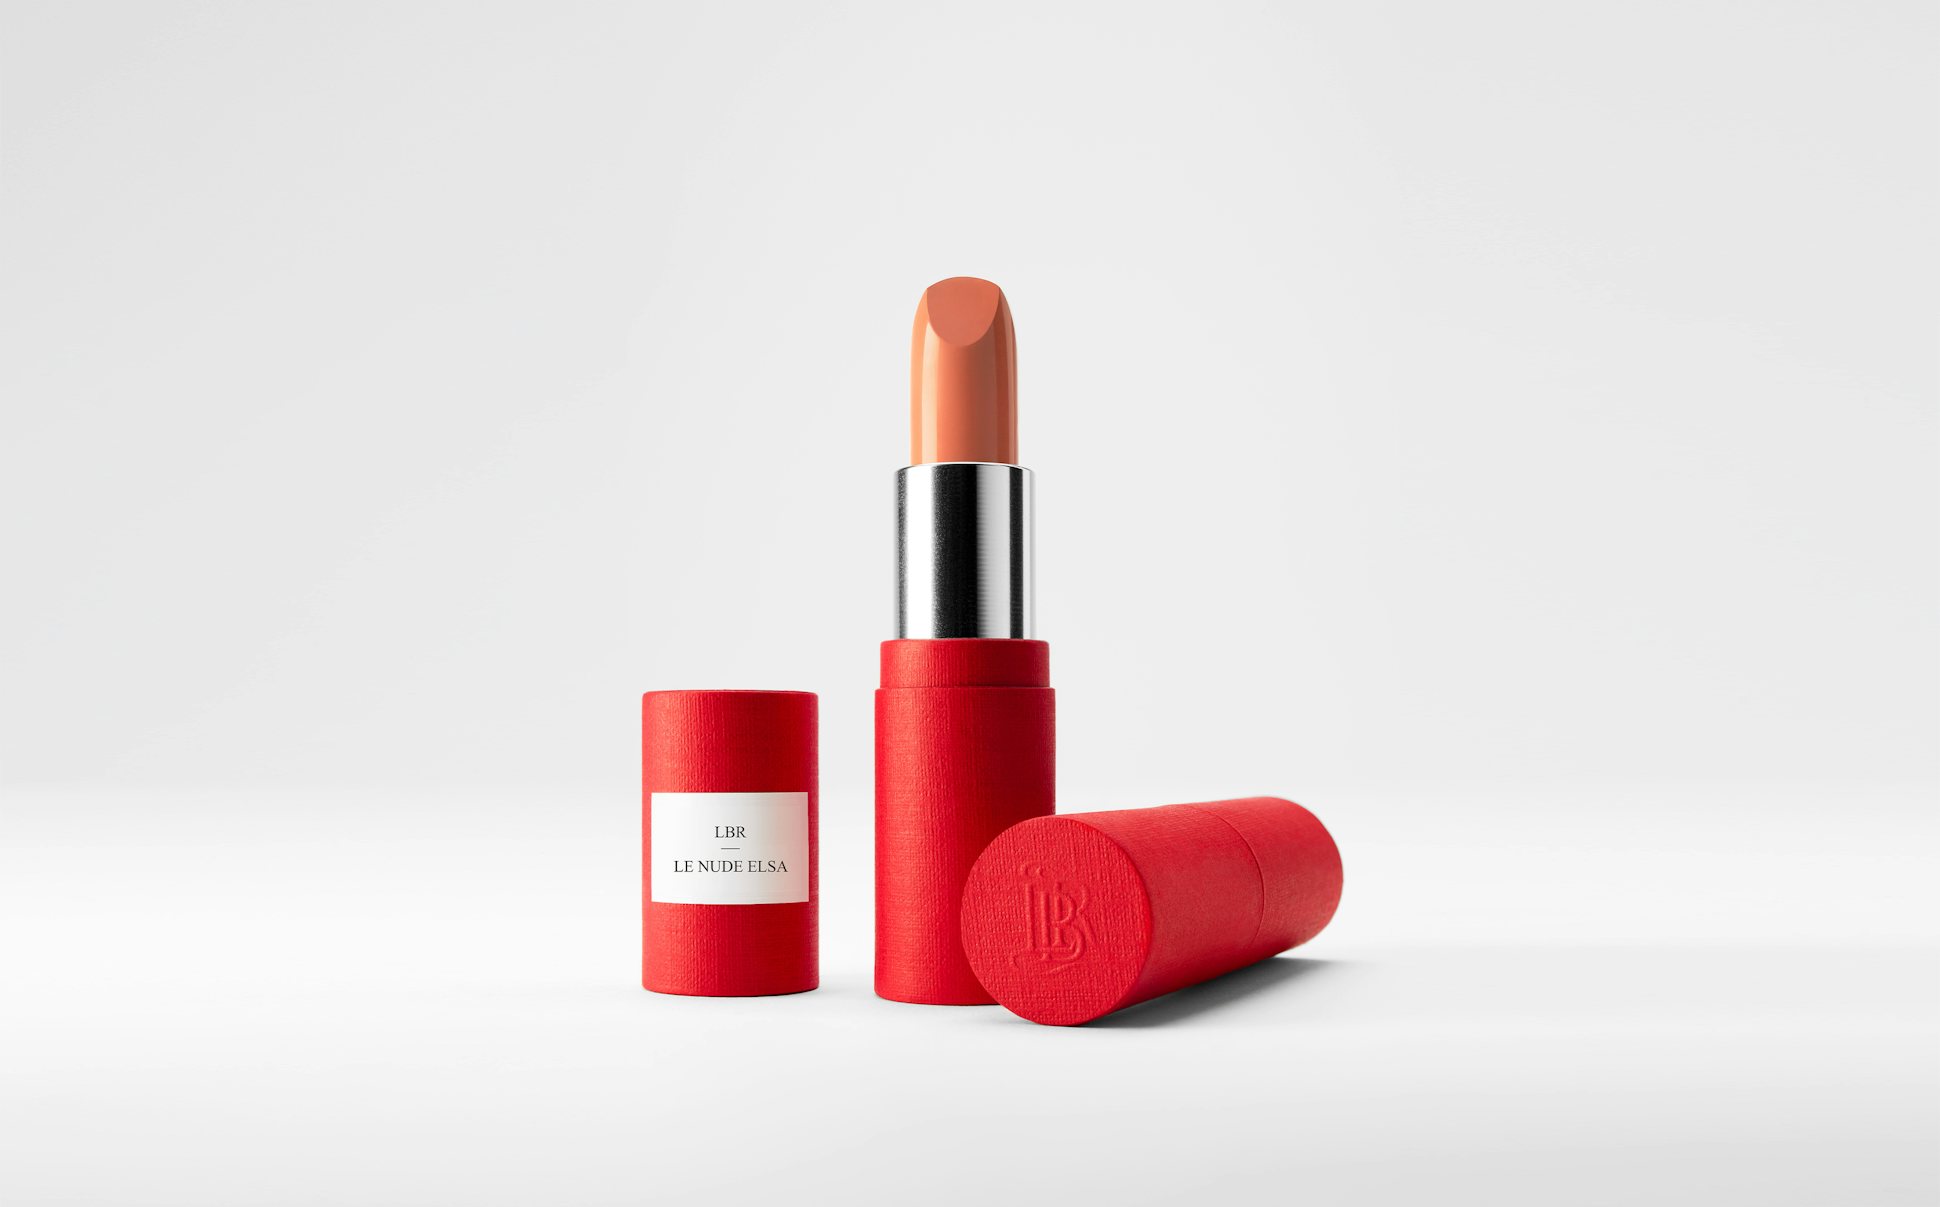 La bouche rouge Le Nude Elsa lipstick in the red paper case